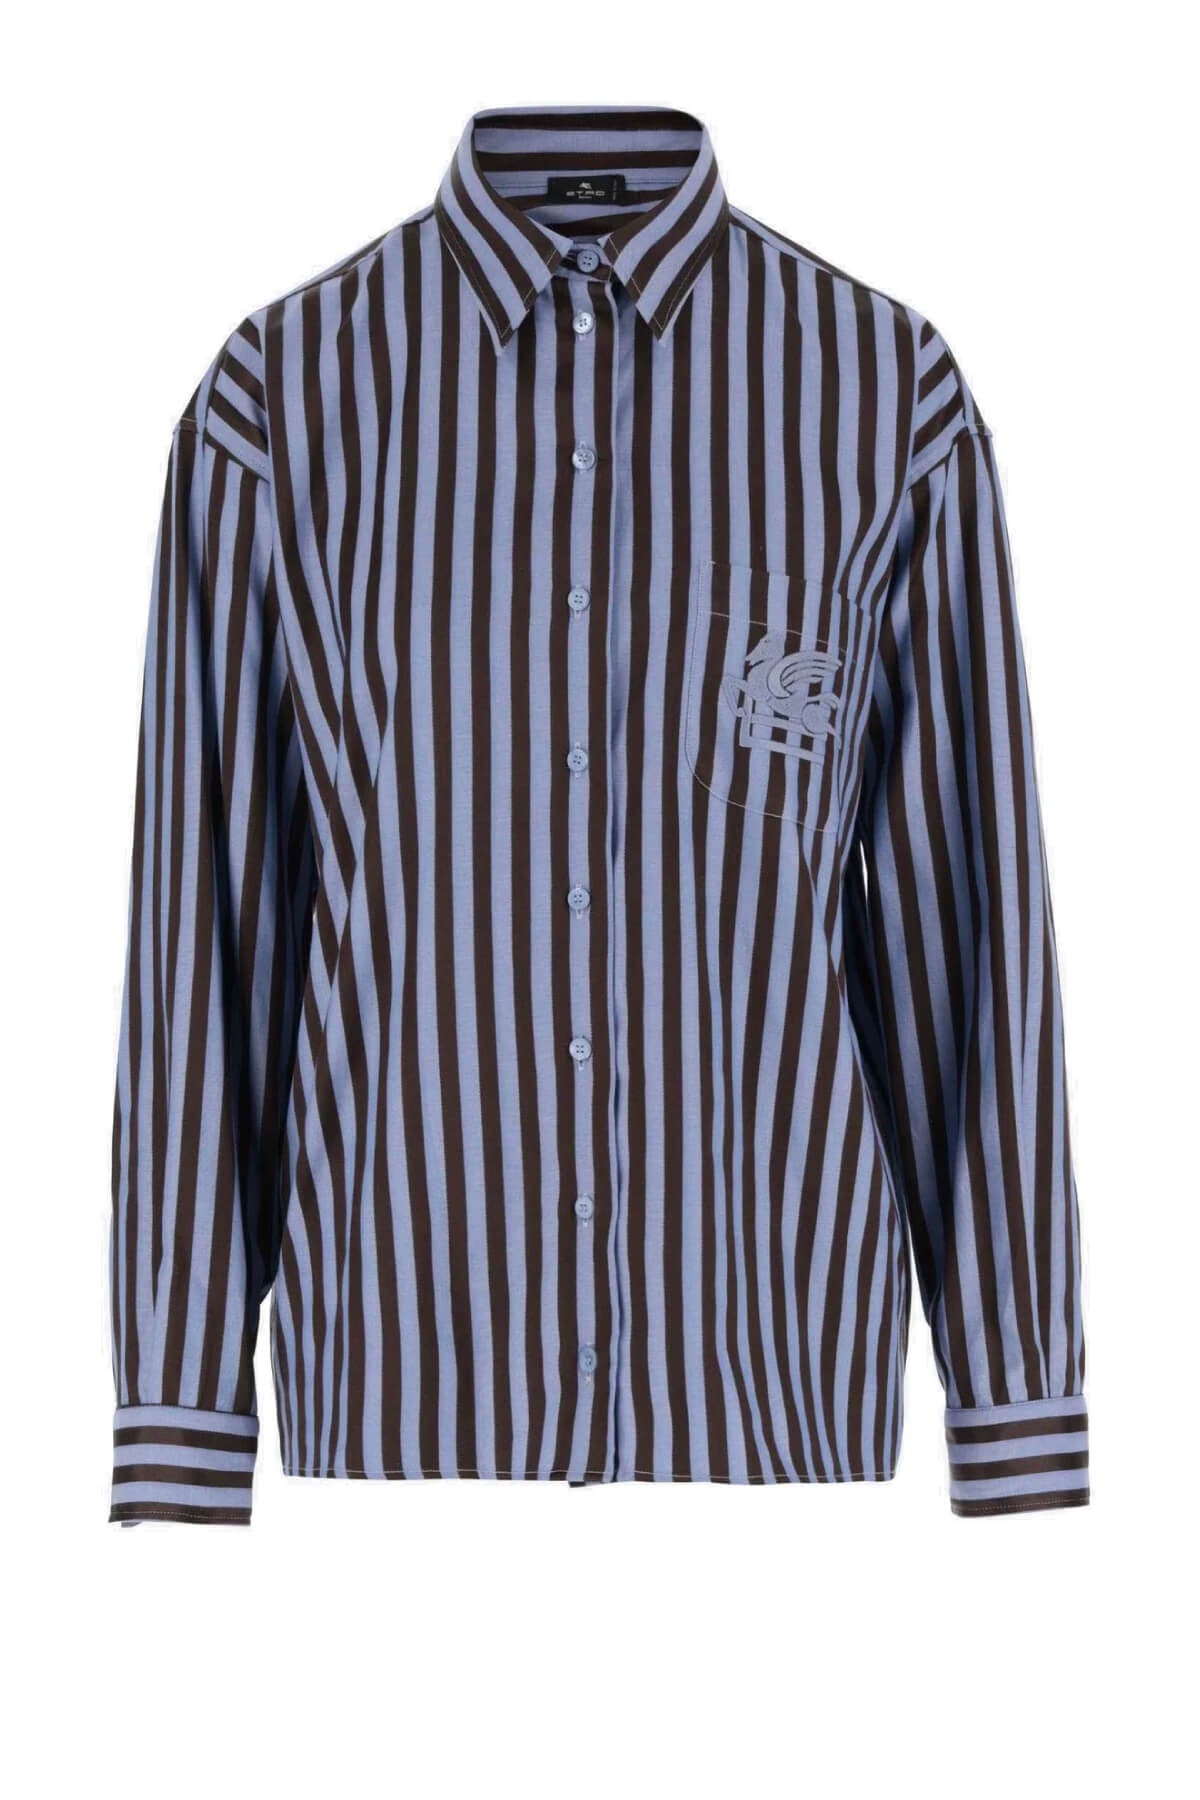 Etro Striped Cotton Shirt - Blue Multi